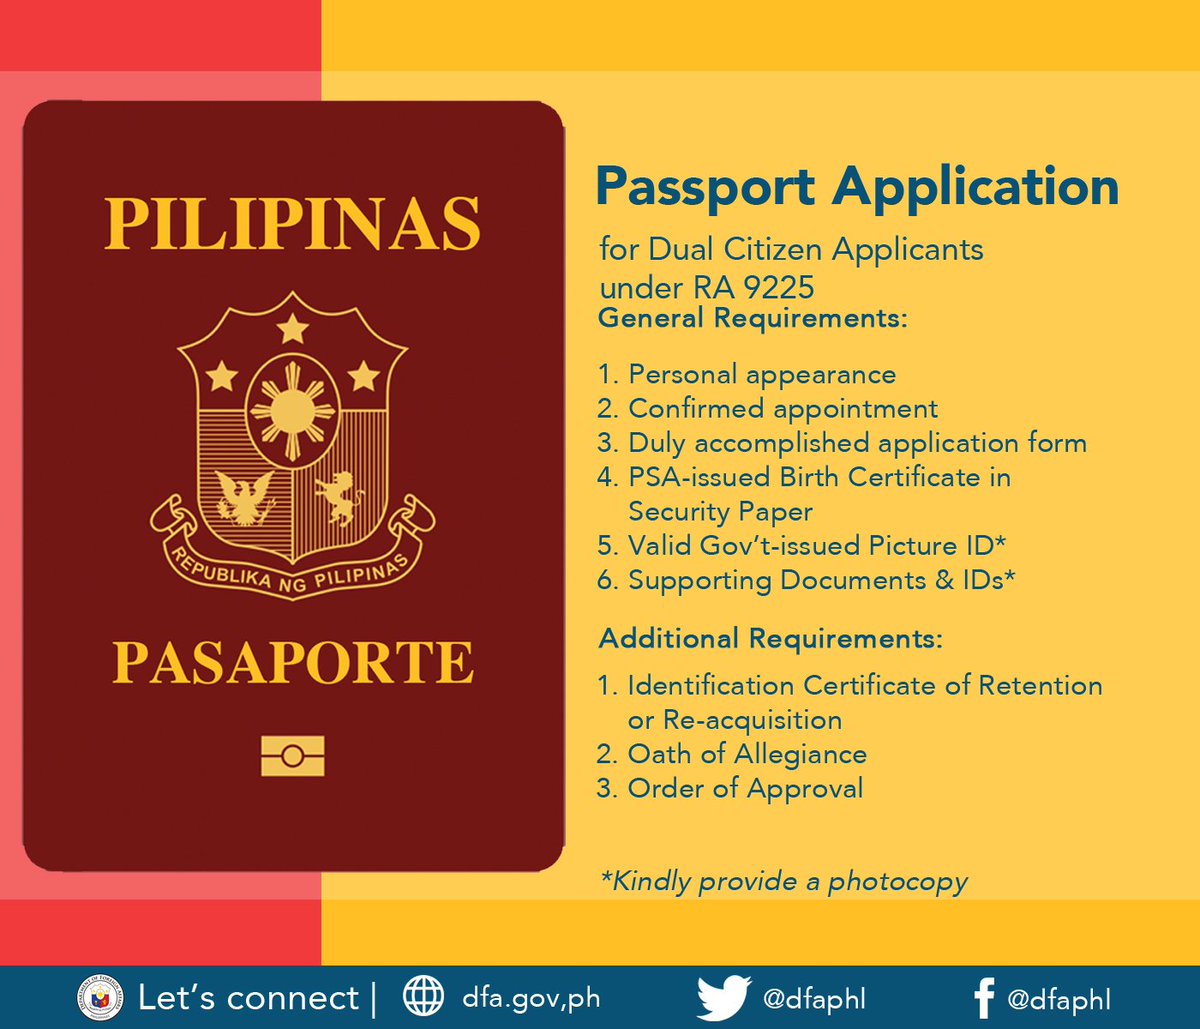 Philippine Passport Application for Dual Citizen Applicants. Photo from dfa.gov.ph